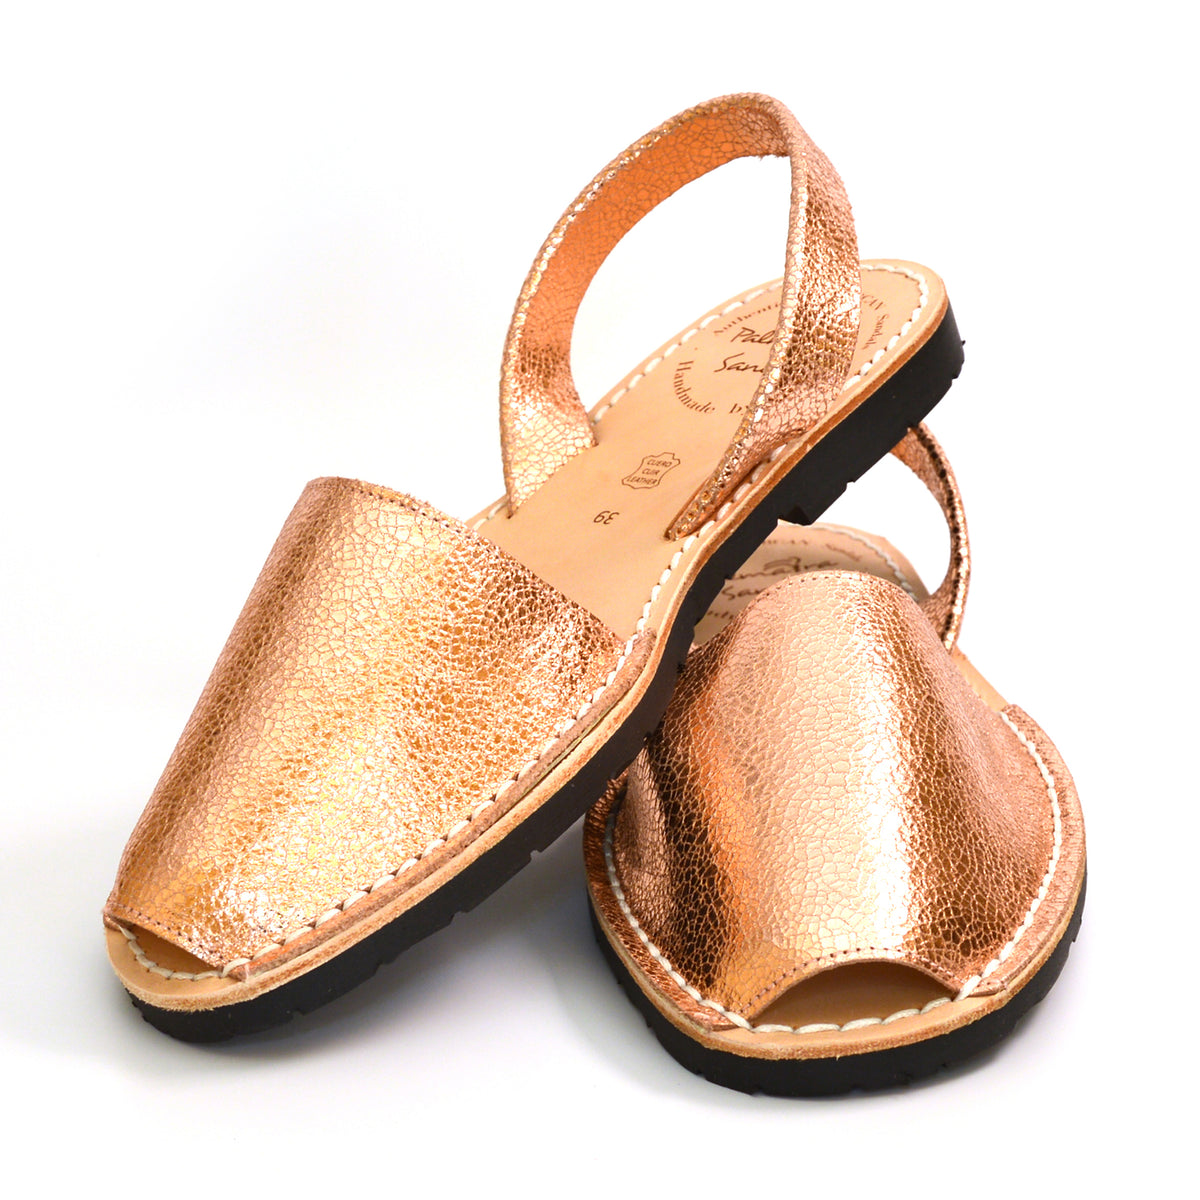 Rose gold leather Spanish menorcan avarcas slingback sandals